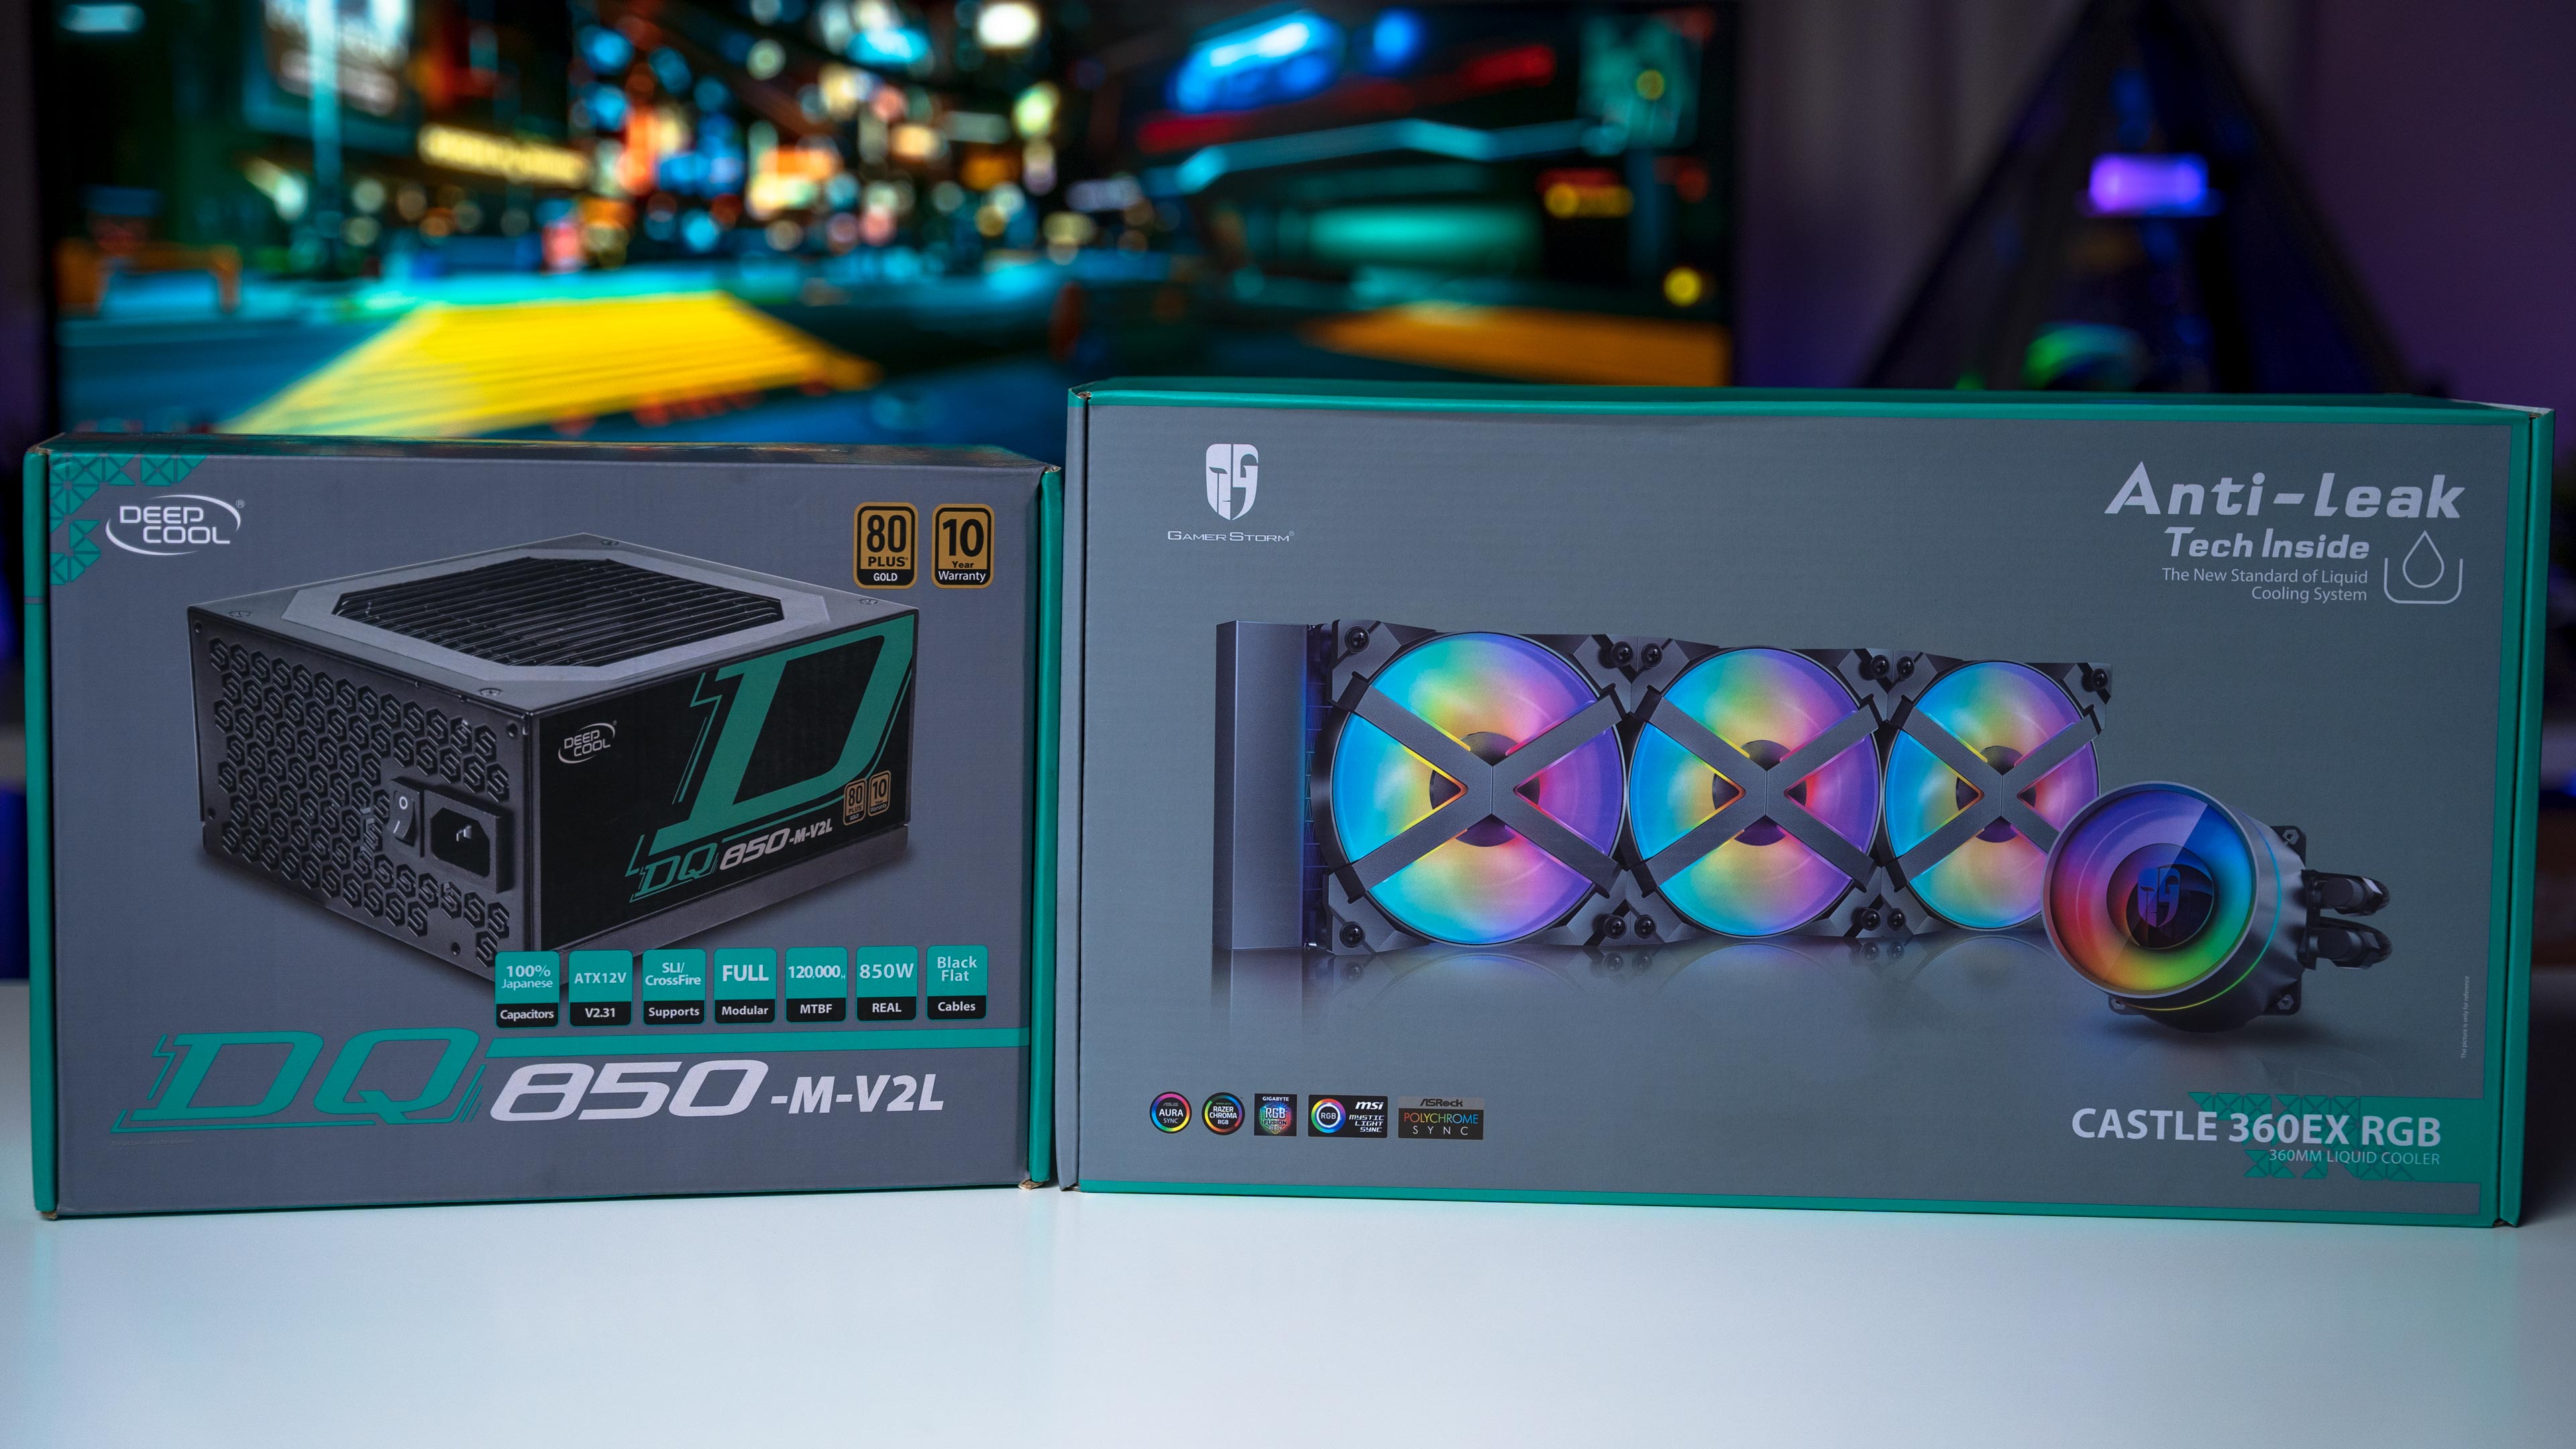 MSI RTX 3080 Gaming PC 2021 Specs (3)